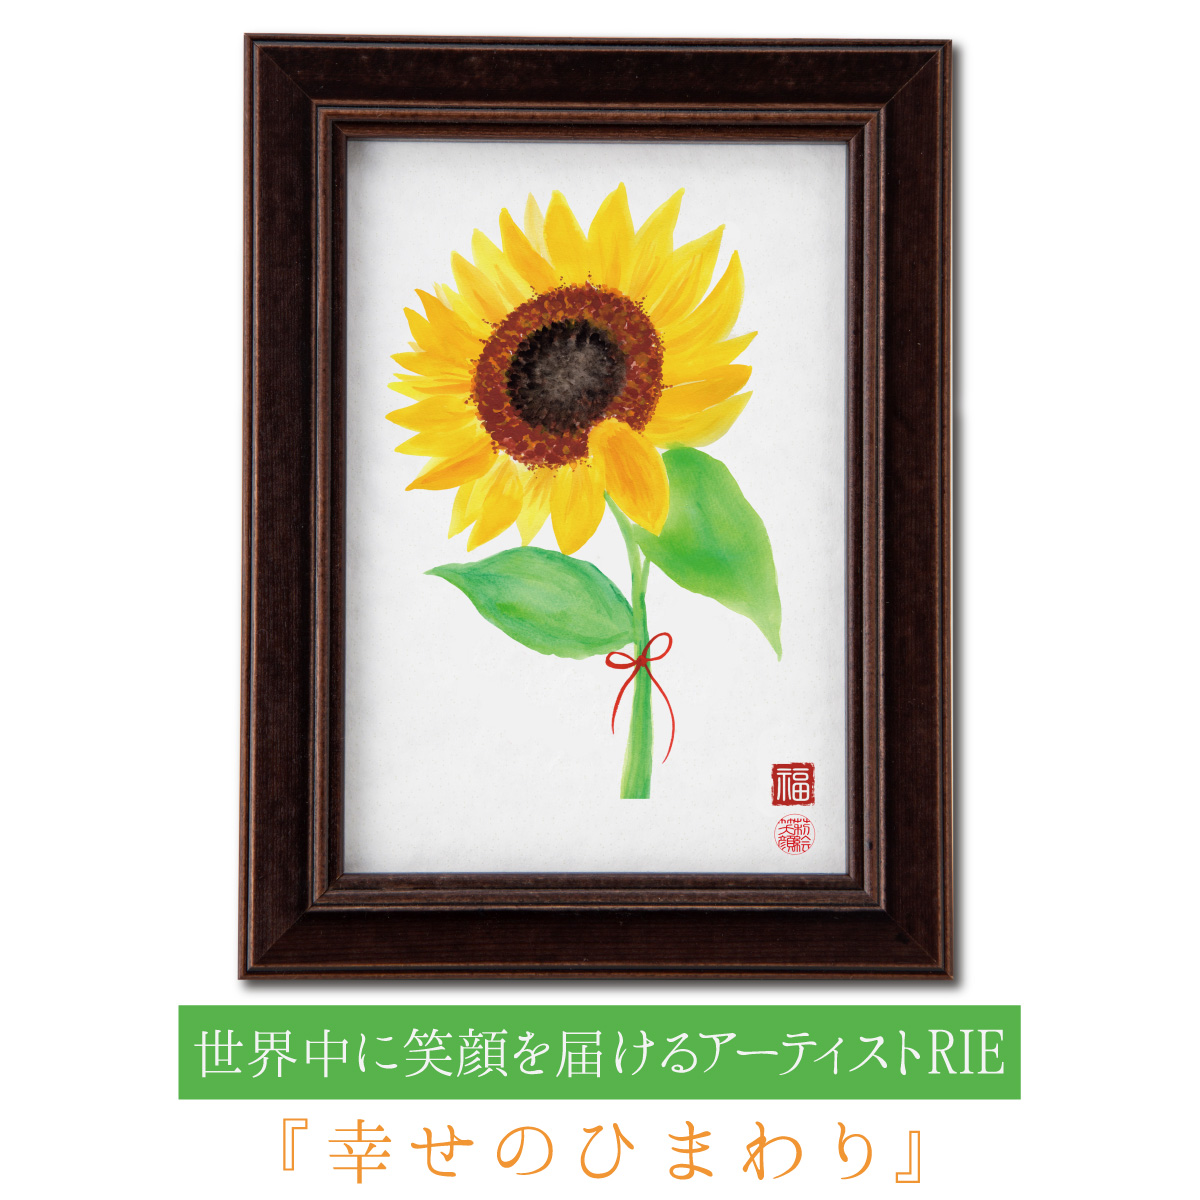 【83%OFF!】 正規品 元気がでますように 大輪の向日葵は太陽の輝きを象徴的に表現 大輪のひまわりが太陽パワーを象徴する 可愛らしい開運アートです 大金運を大輪のヒマワリで RIEの 幸せのひまわり jp.startup-dating.com jp.startup-dating.com